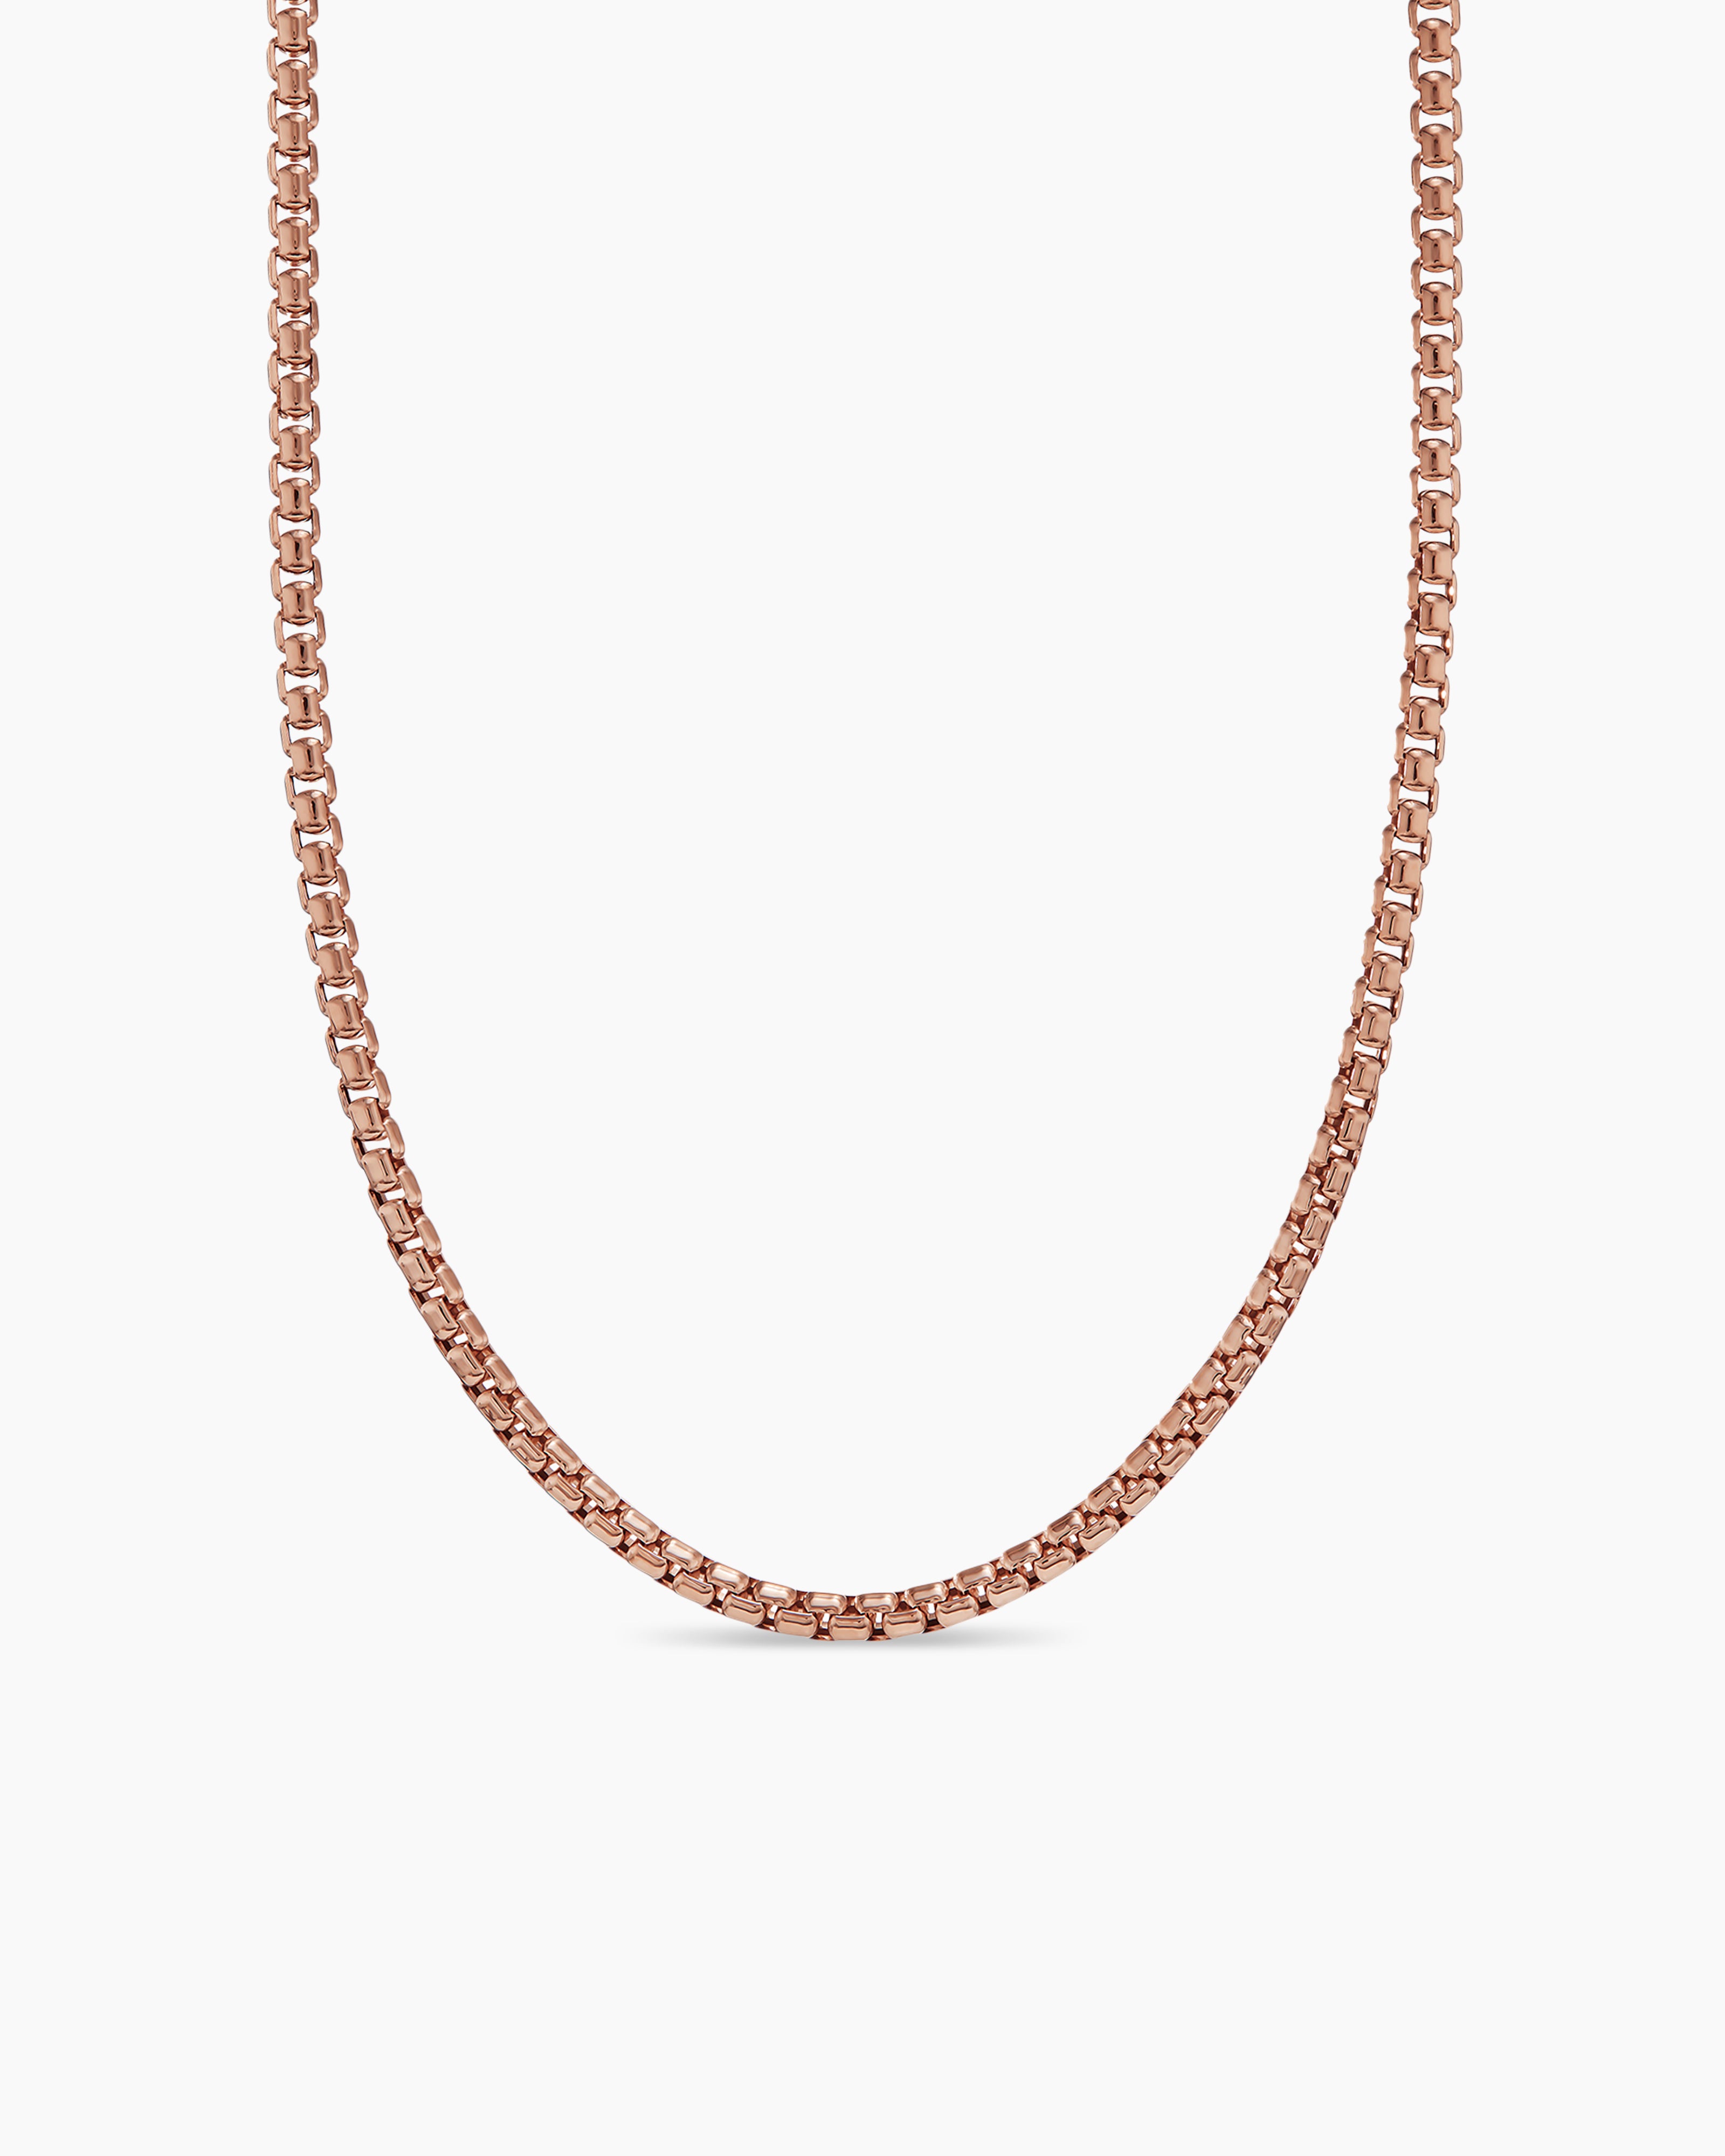 David Yurman Men's Medium Box Chain Necklace in 18K Rose Gold